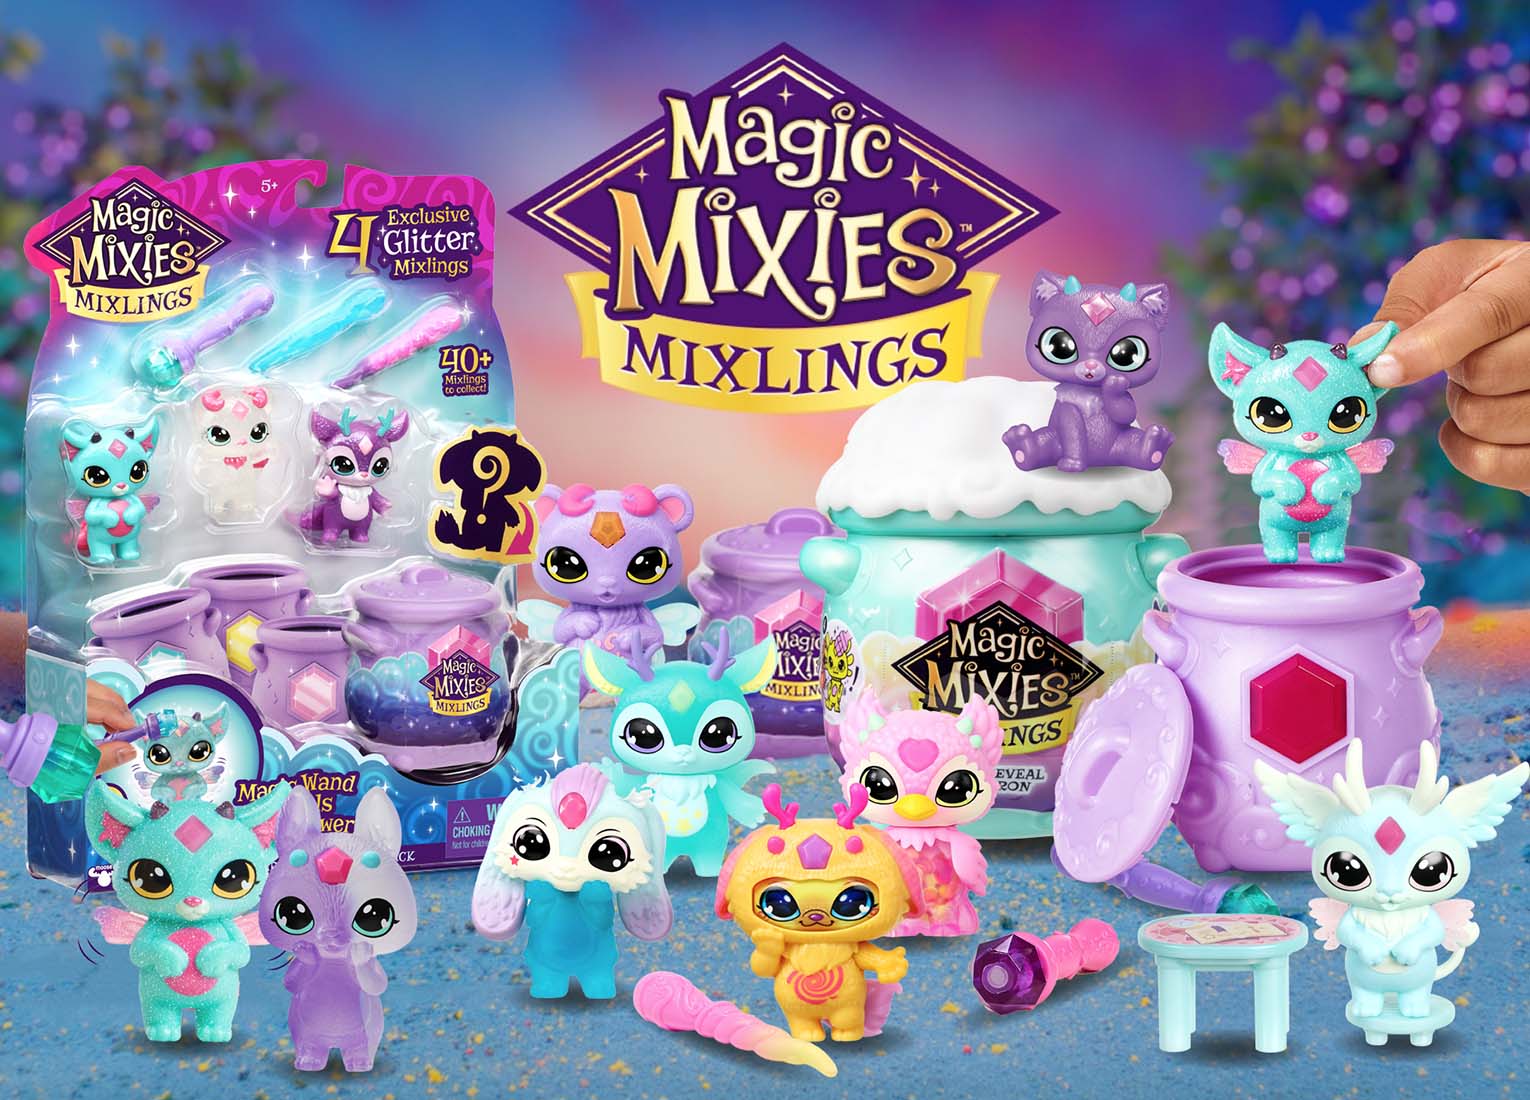 Magic Mixies Mixlings - Tik & Ontdek Ketel (Duo pack)